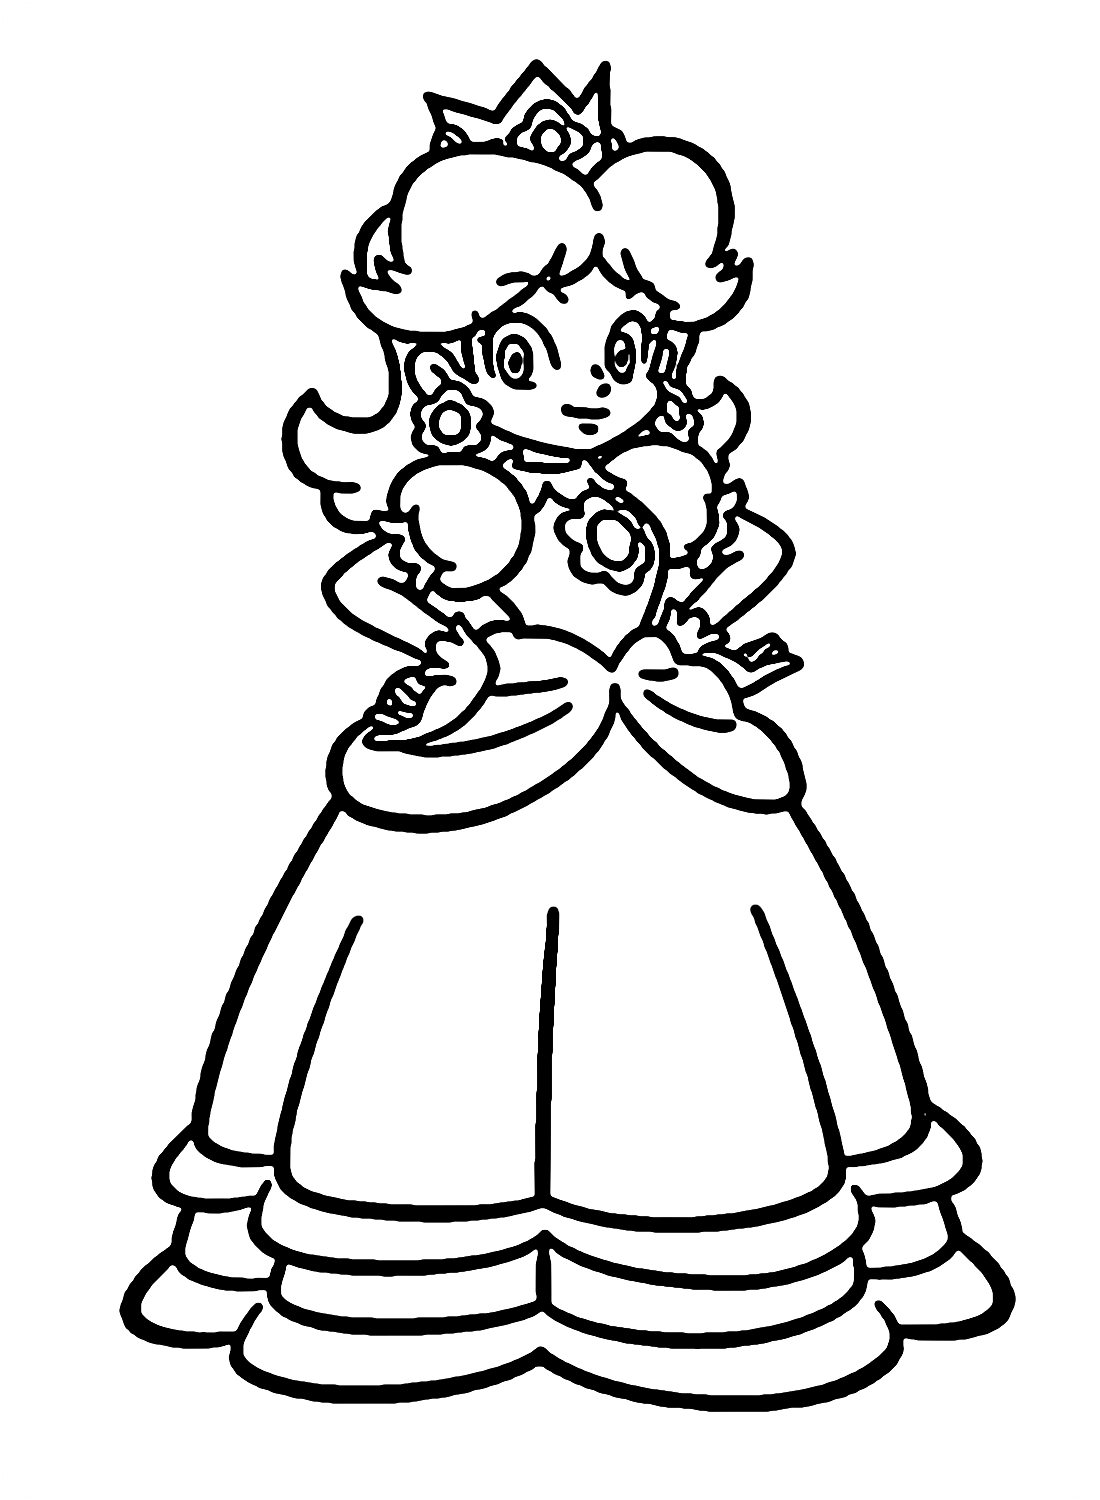 Prinses Daisy uit Super Mario van Prinses Daisy